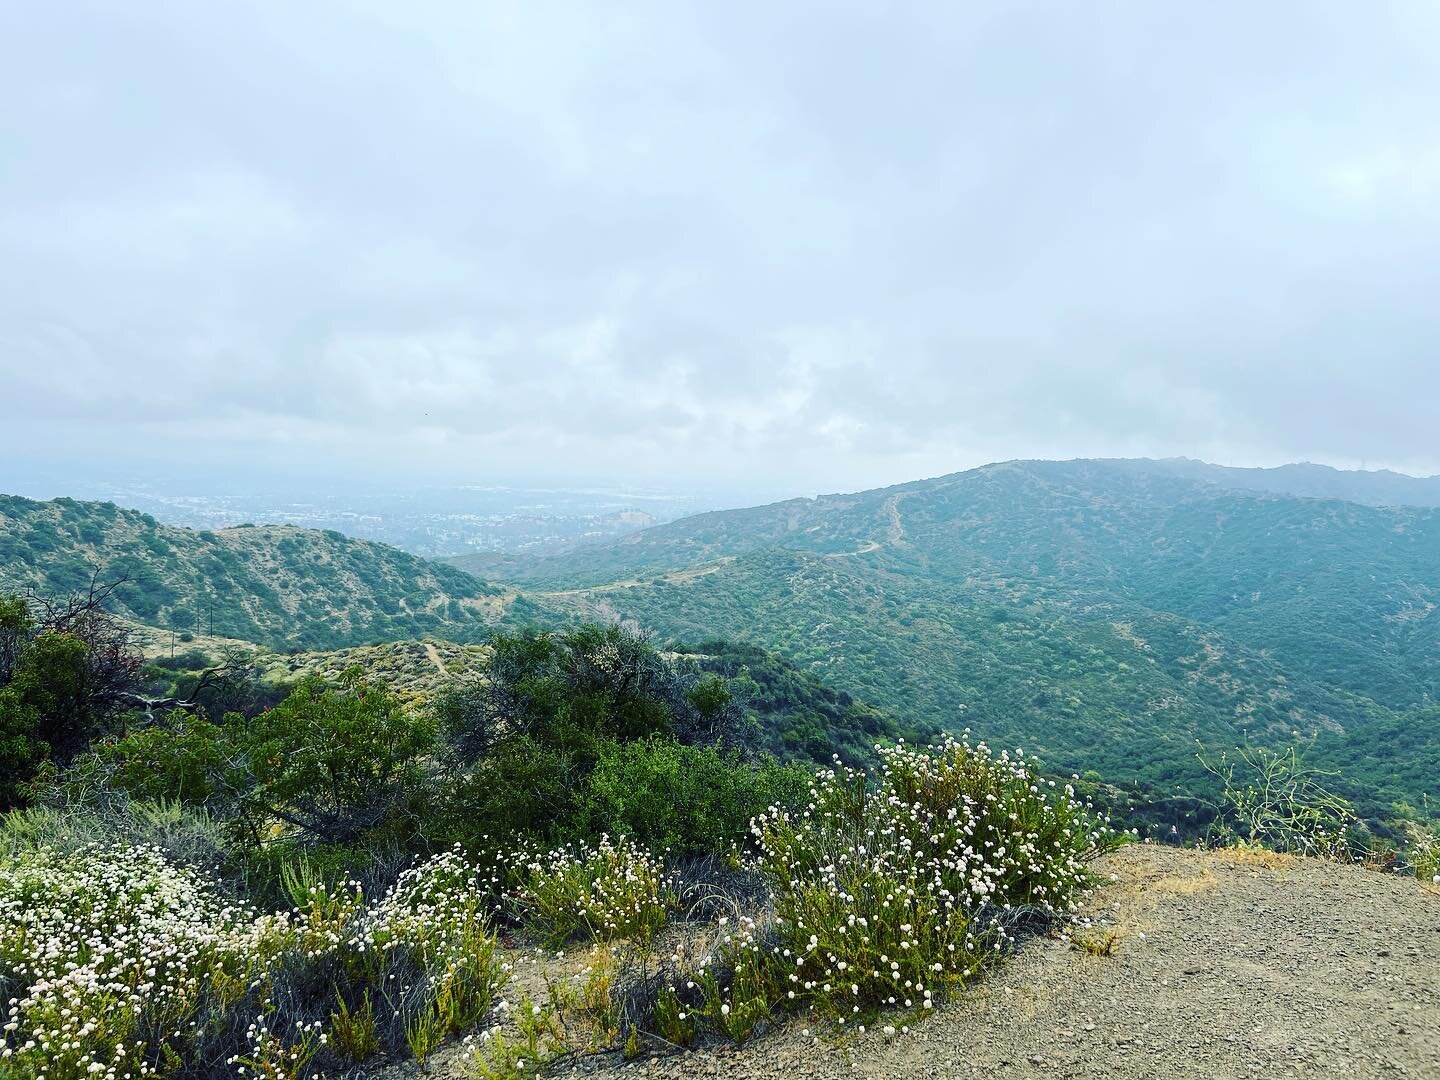 A cloudy hike with a weird shadow🤯